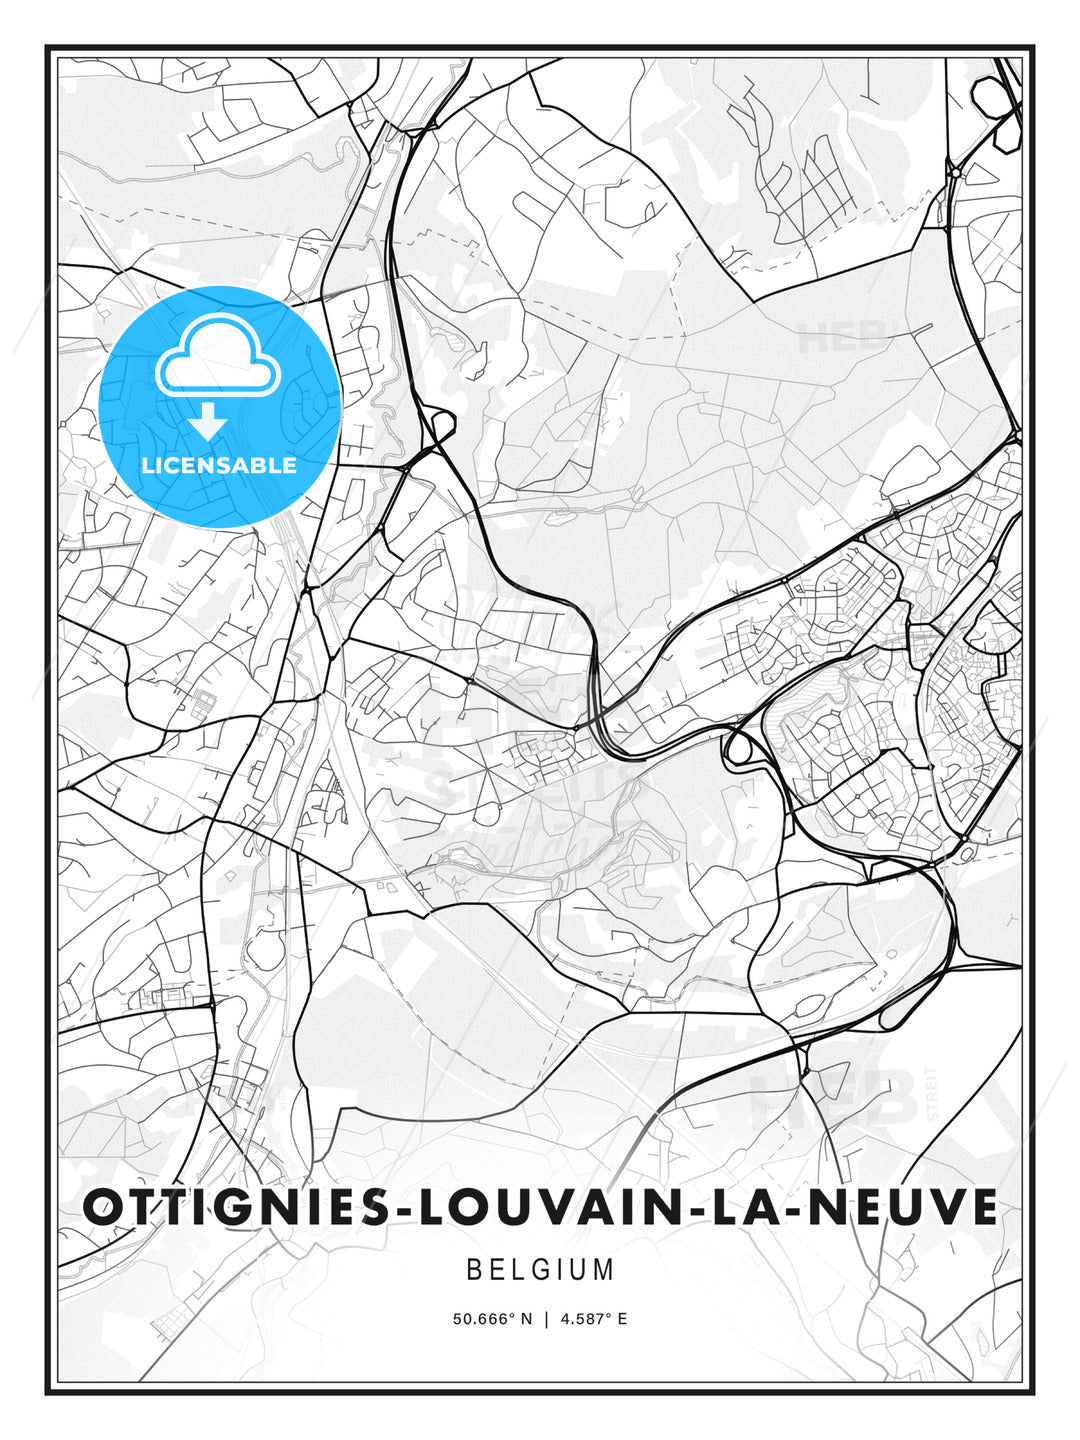 Ottignies-Louvain-la-Neuve, Belgium, Modern Print Template in Various Formats - HEBSTREITS Sketches